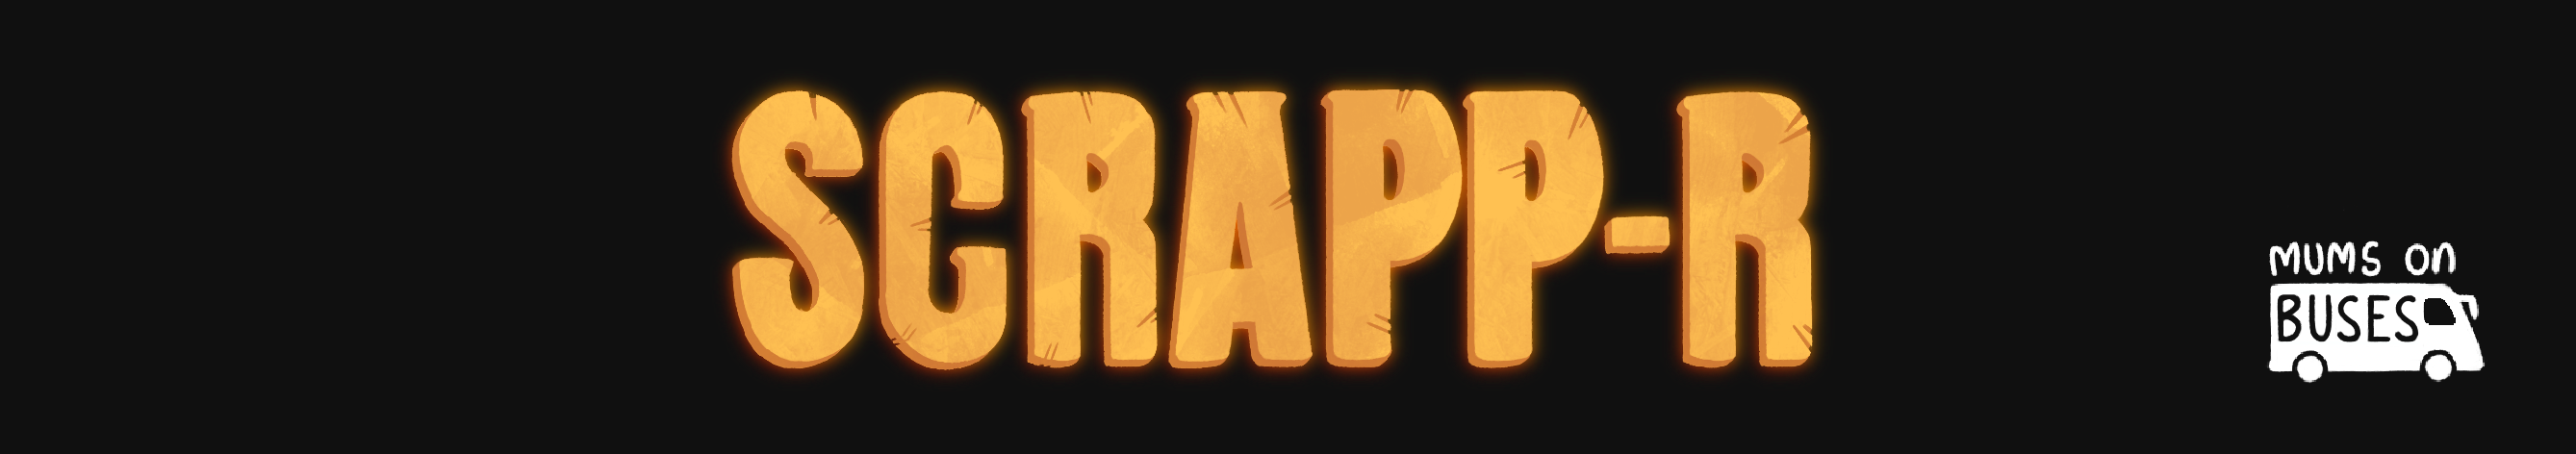 SCRAPP-R